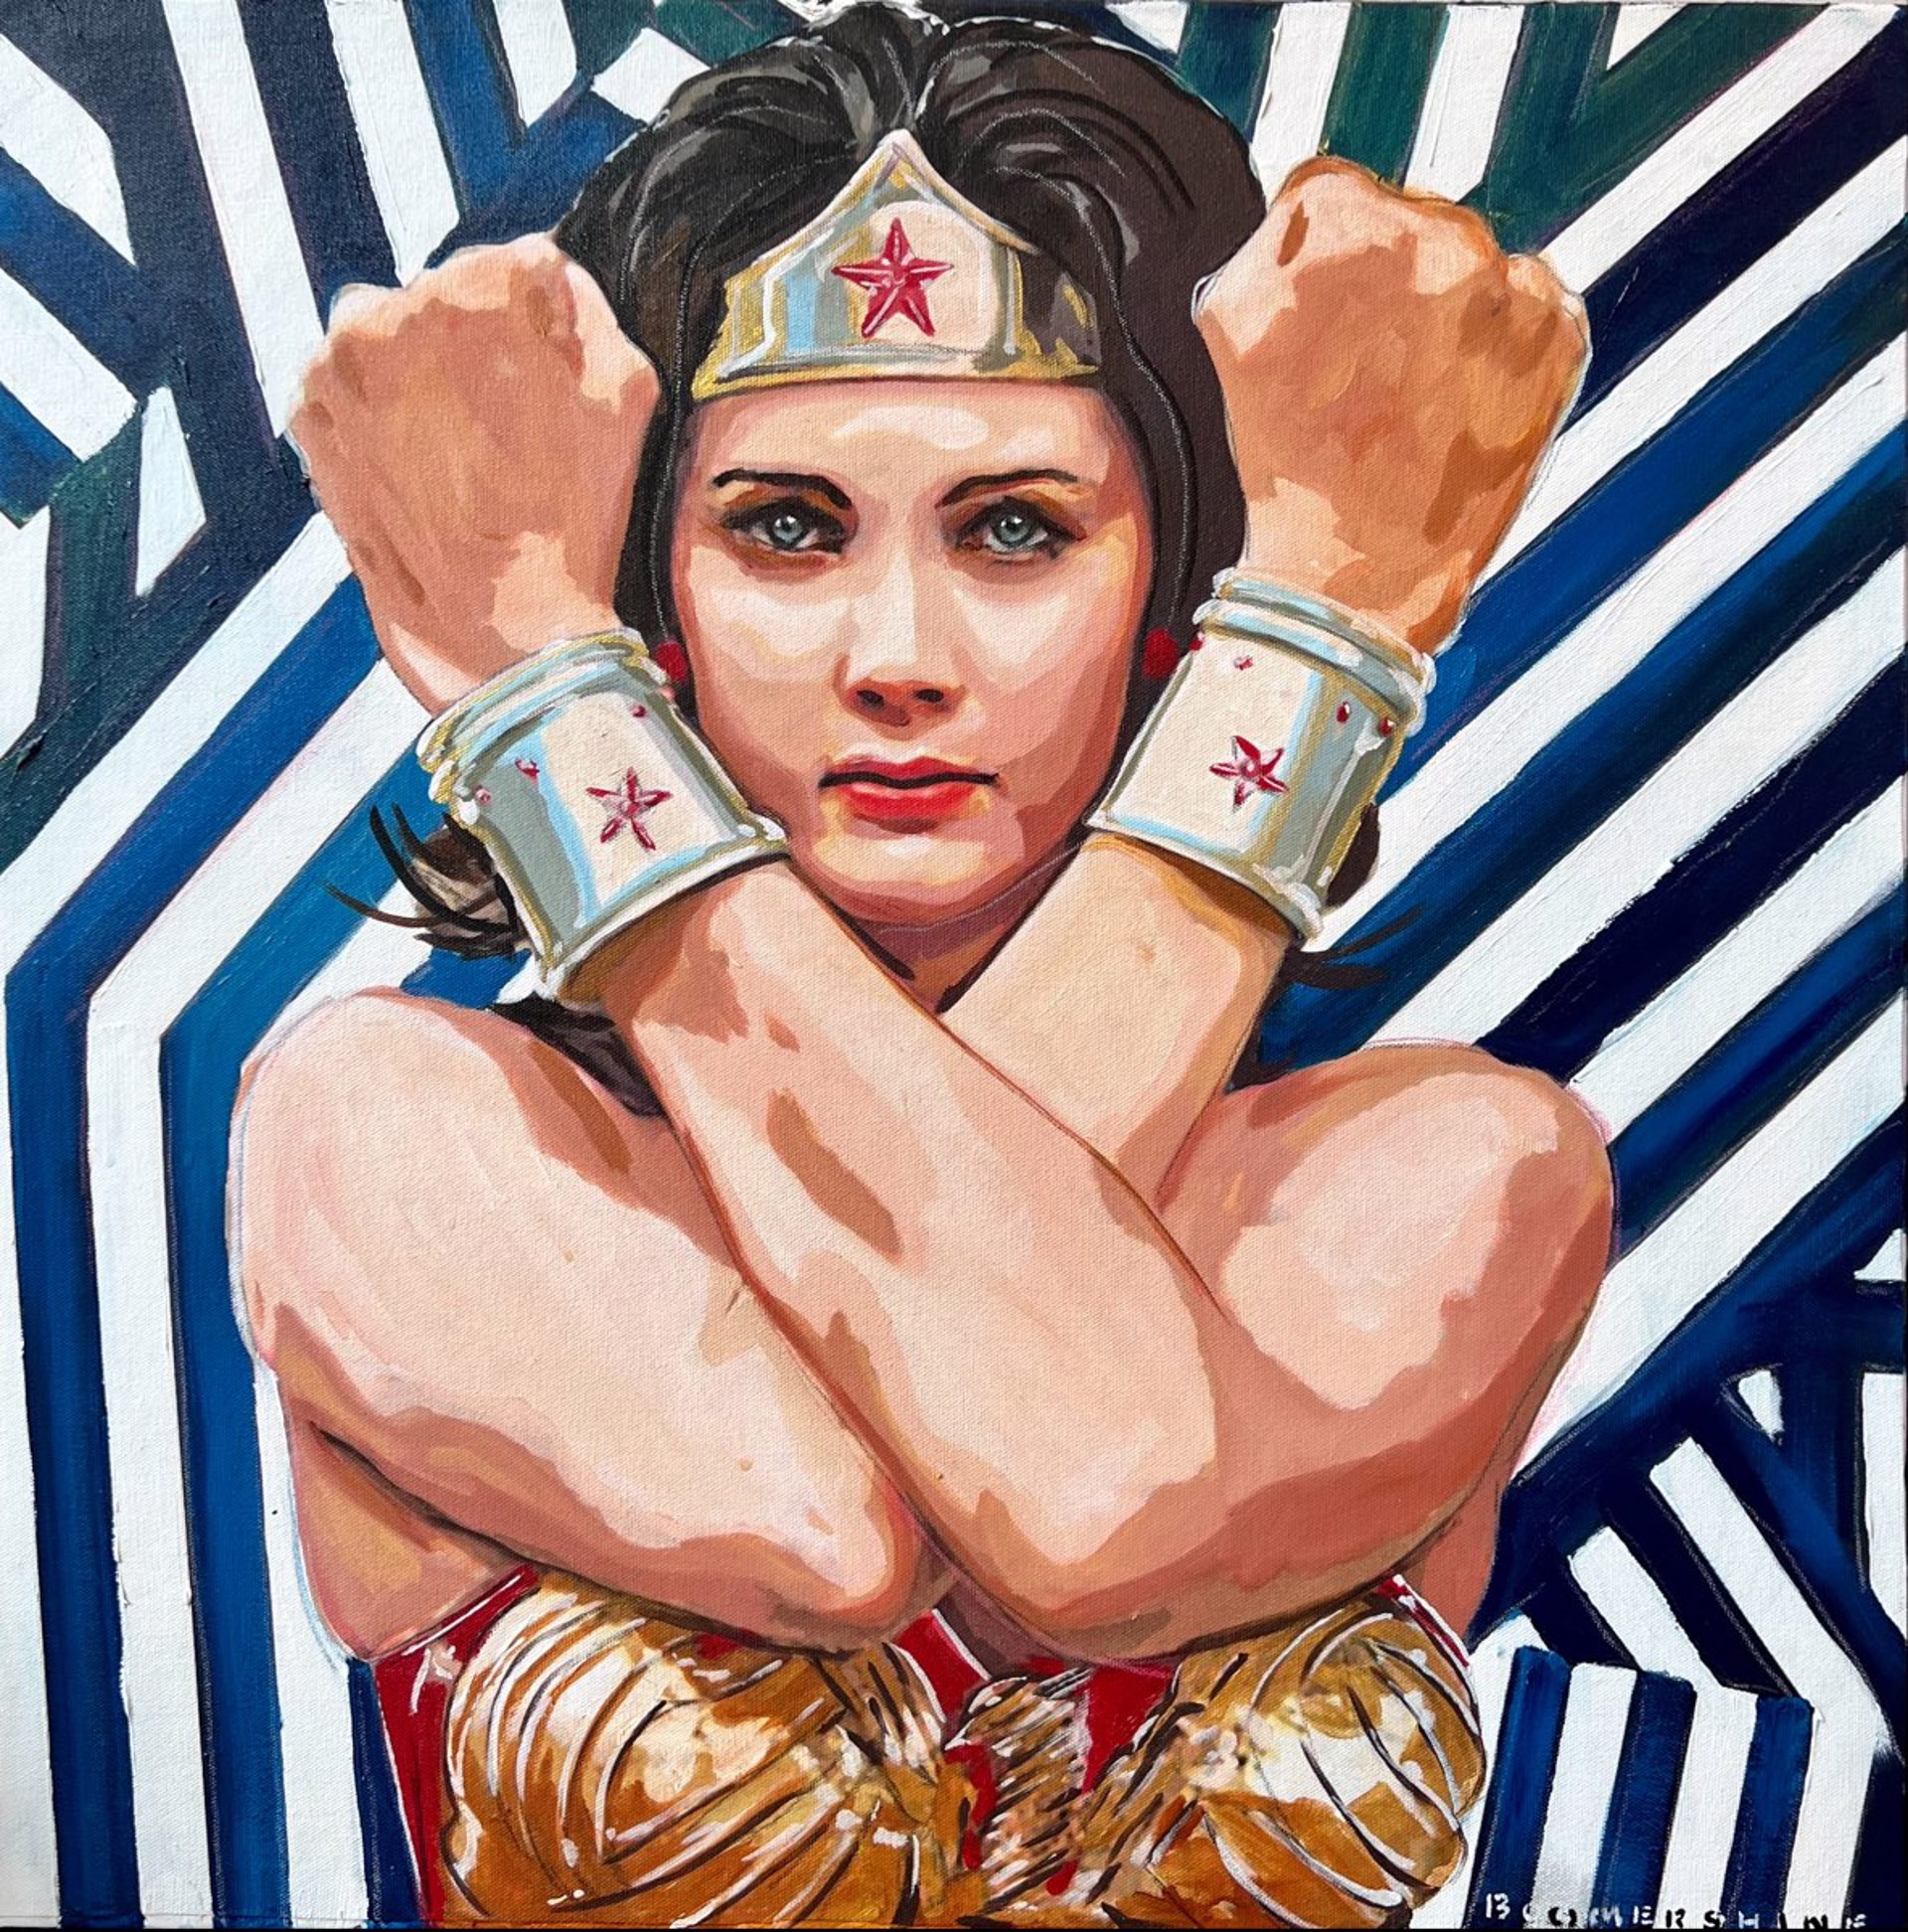 Wonder Woman Navy by Mark Boomershine